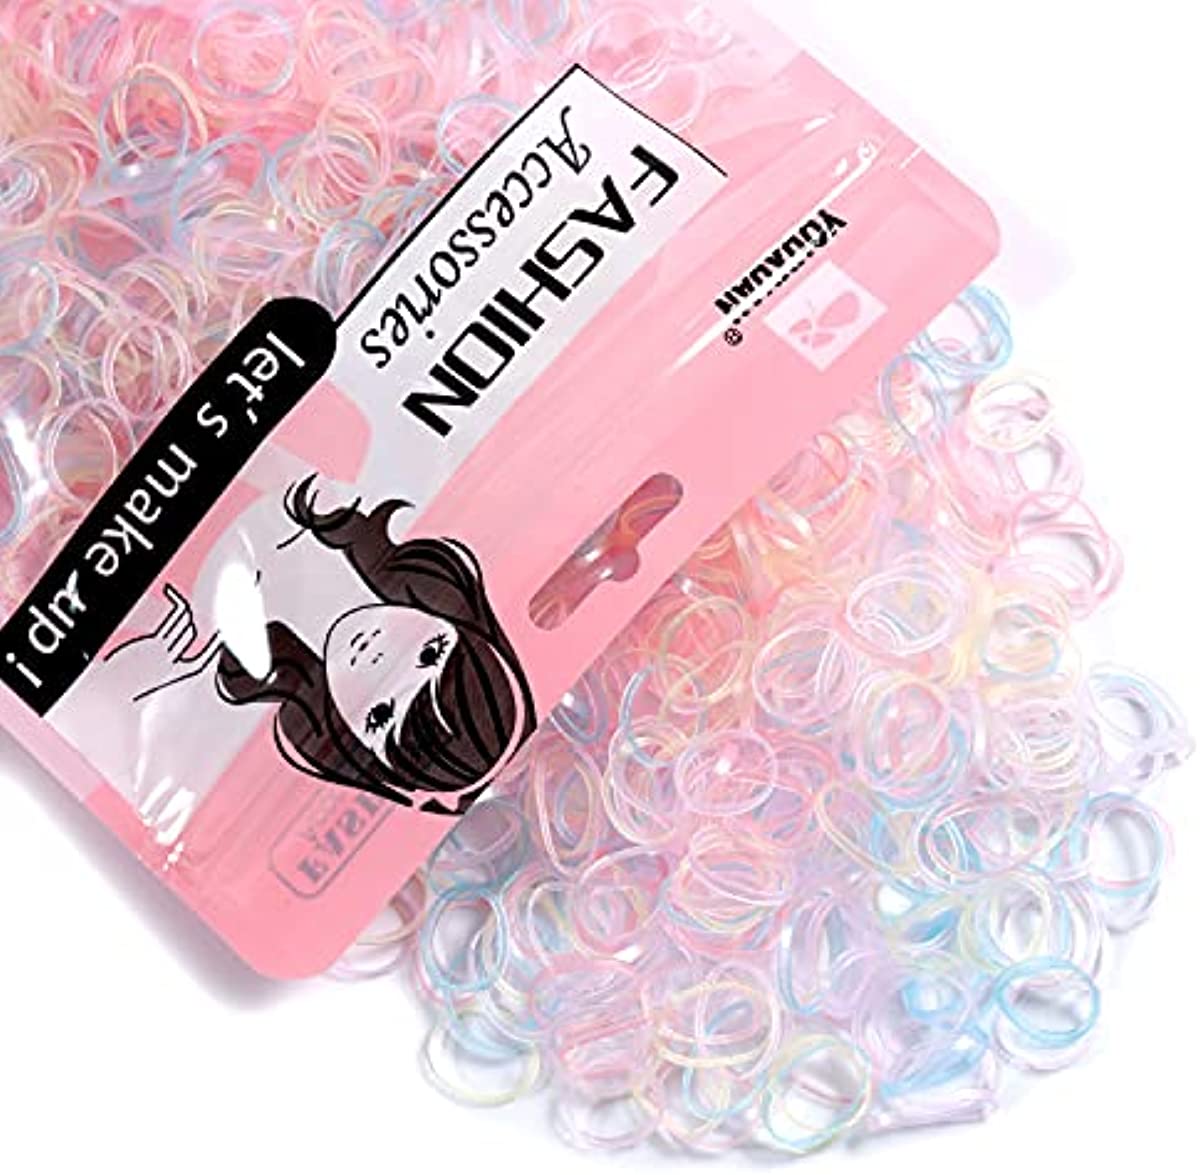 Youxuan Mini Hair Elastics for Girls Transparent Rubber Bands, 1000 PCS, Multi Color